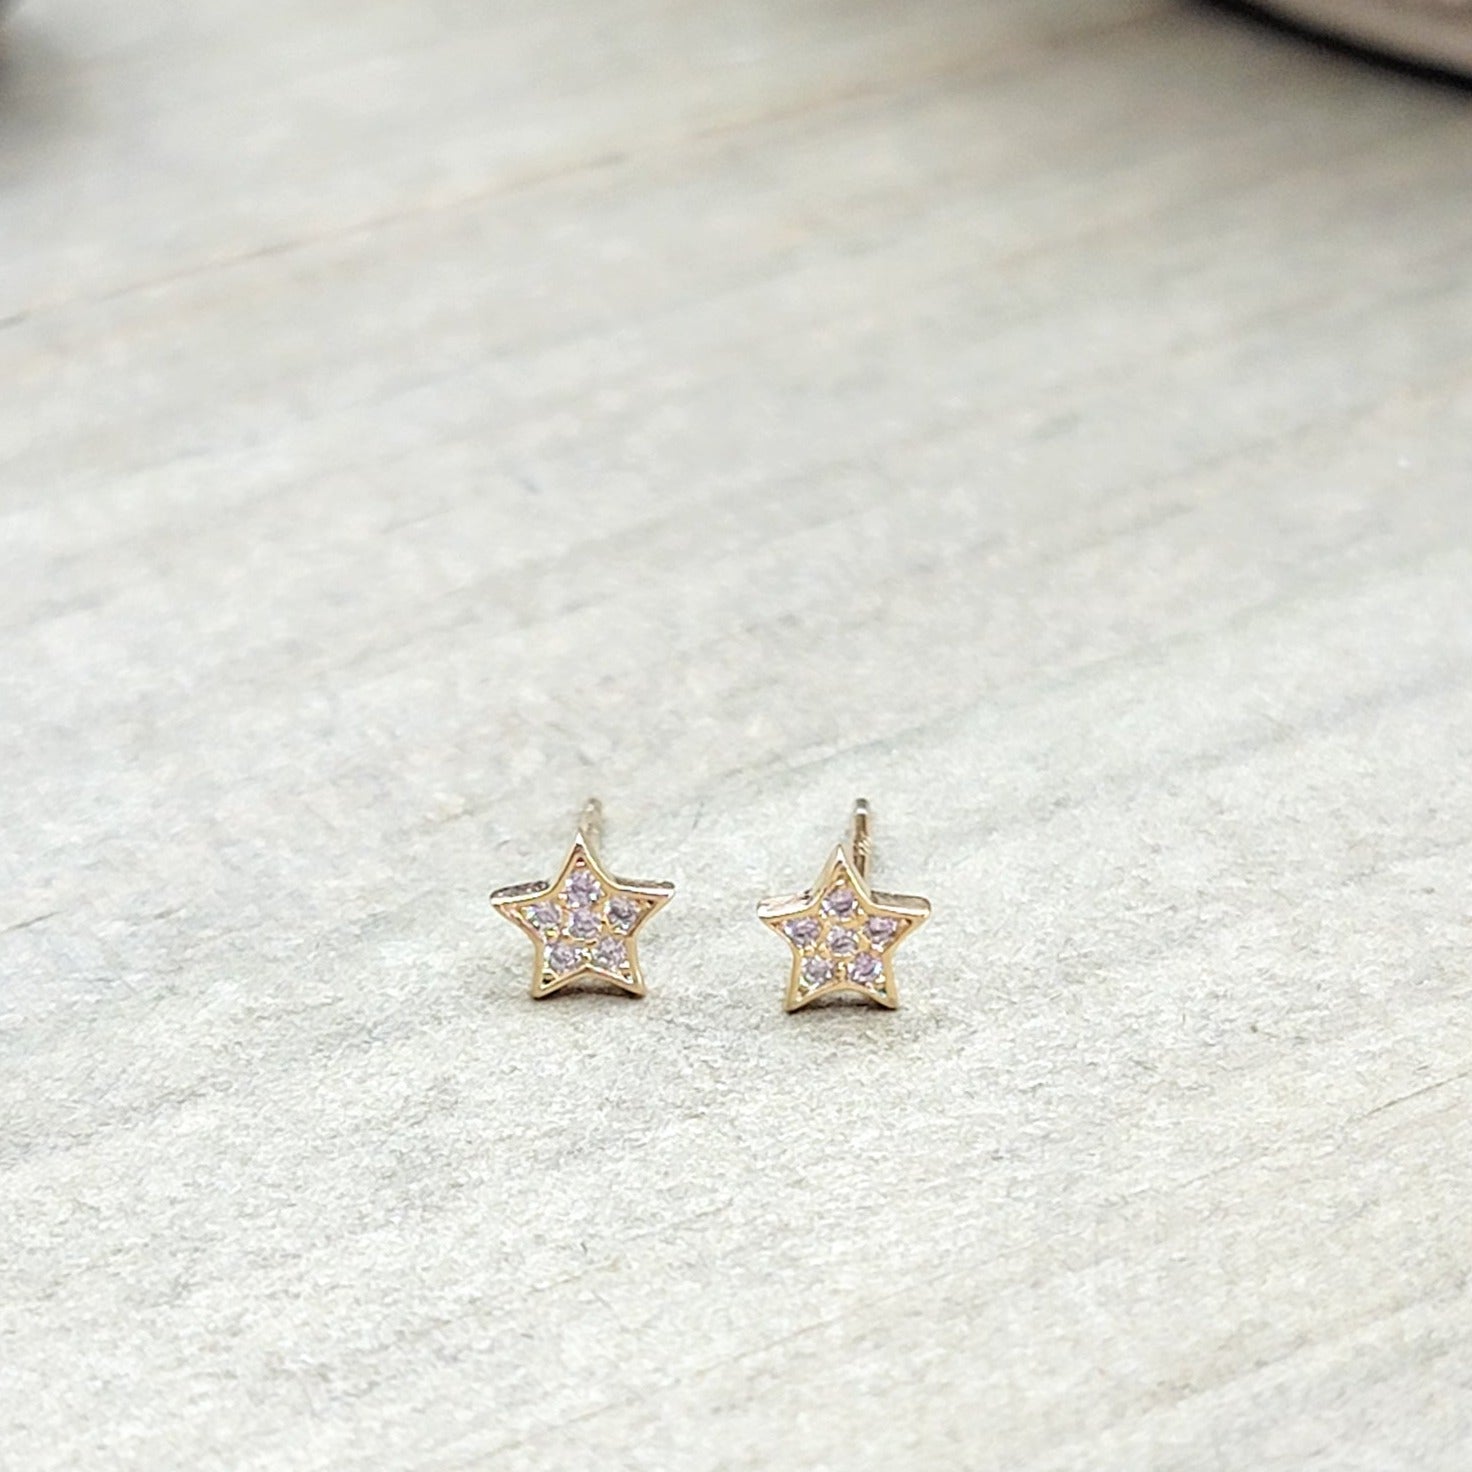 Tiny Gold Pave Star Stud Earrings - Nicki Lynn Jewelry